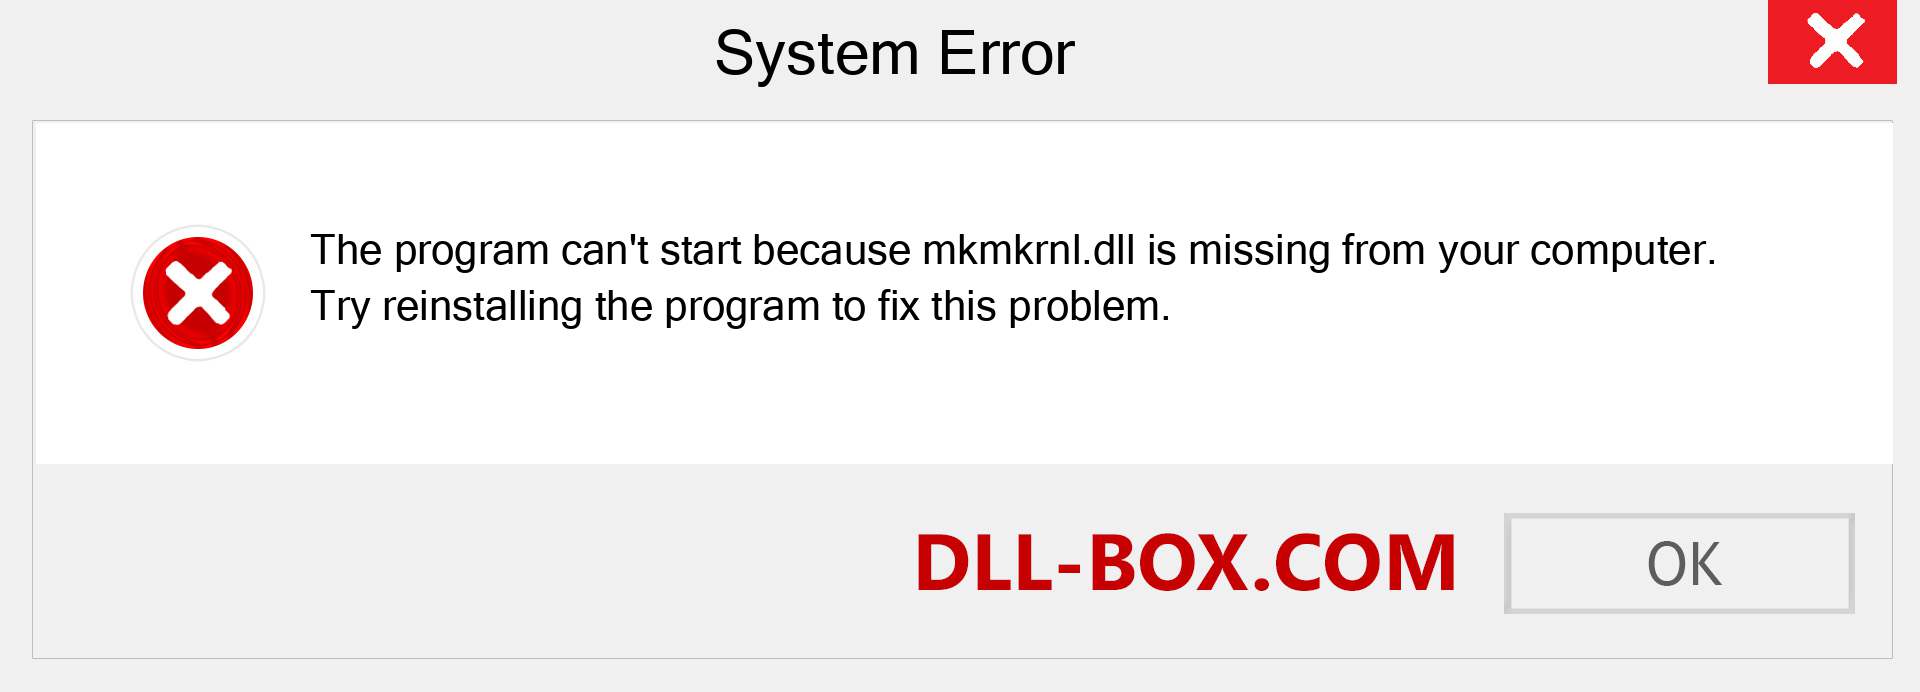  mkmkrnl.dll file is missing?. Download for Windows 7, 8, 10 - Fix  mkmkrnl dll Missing Error on Windows, photos, images